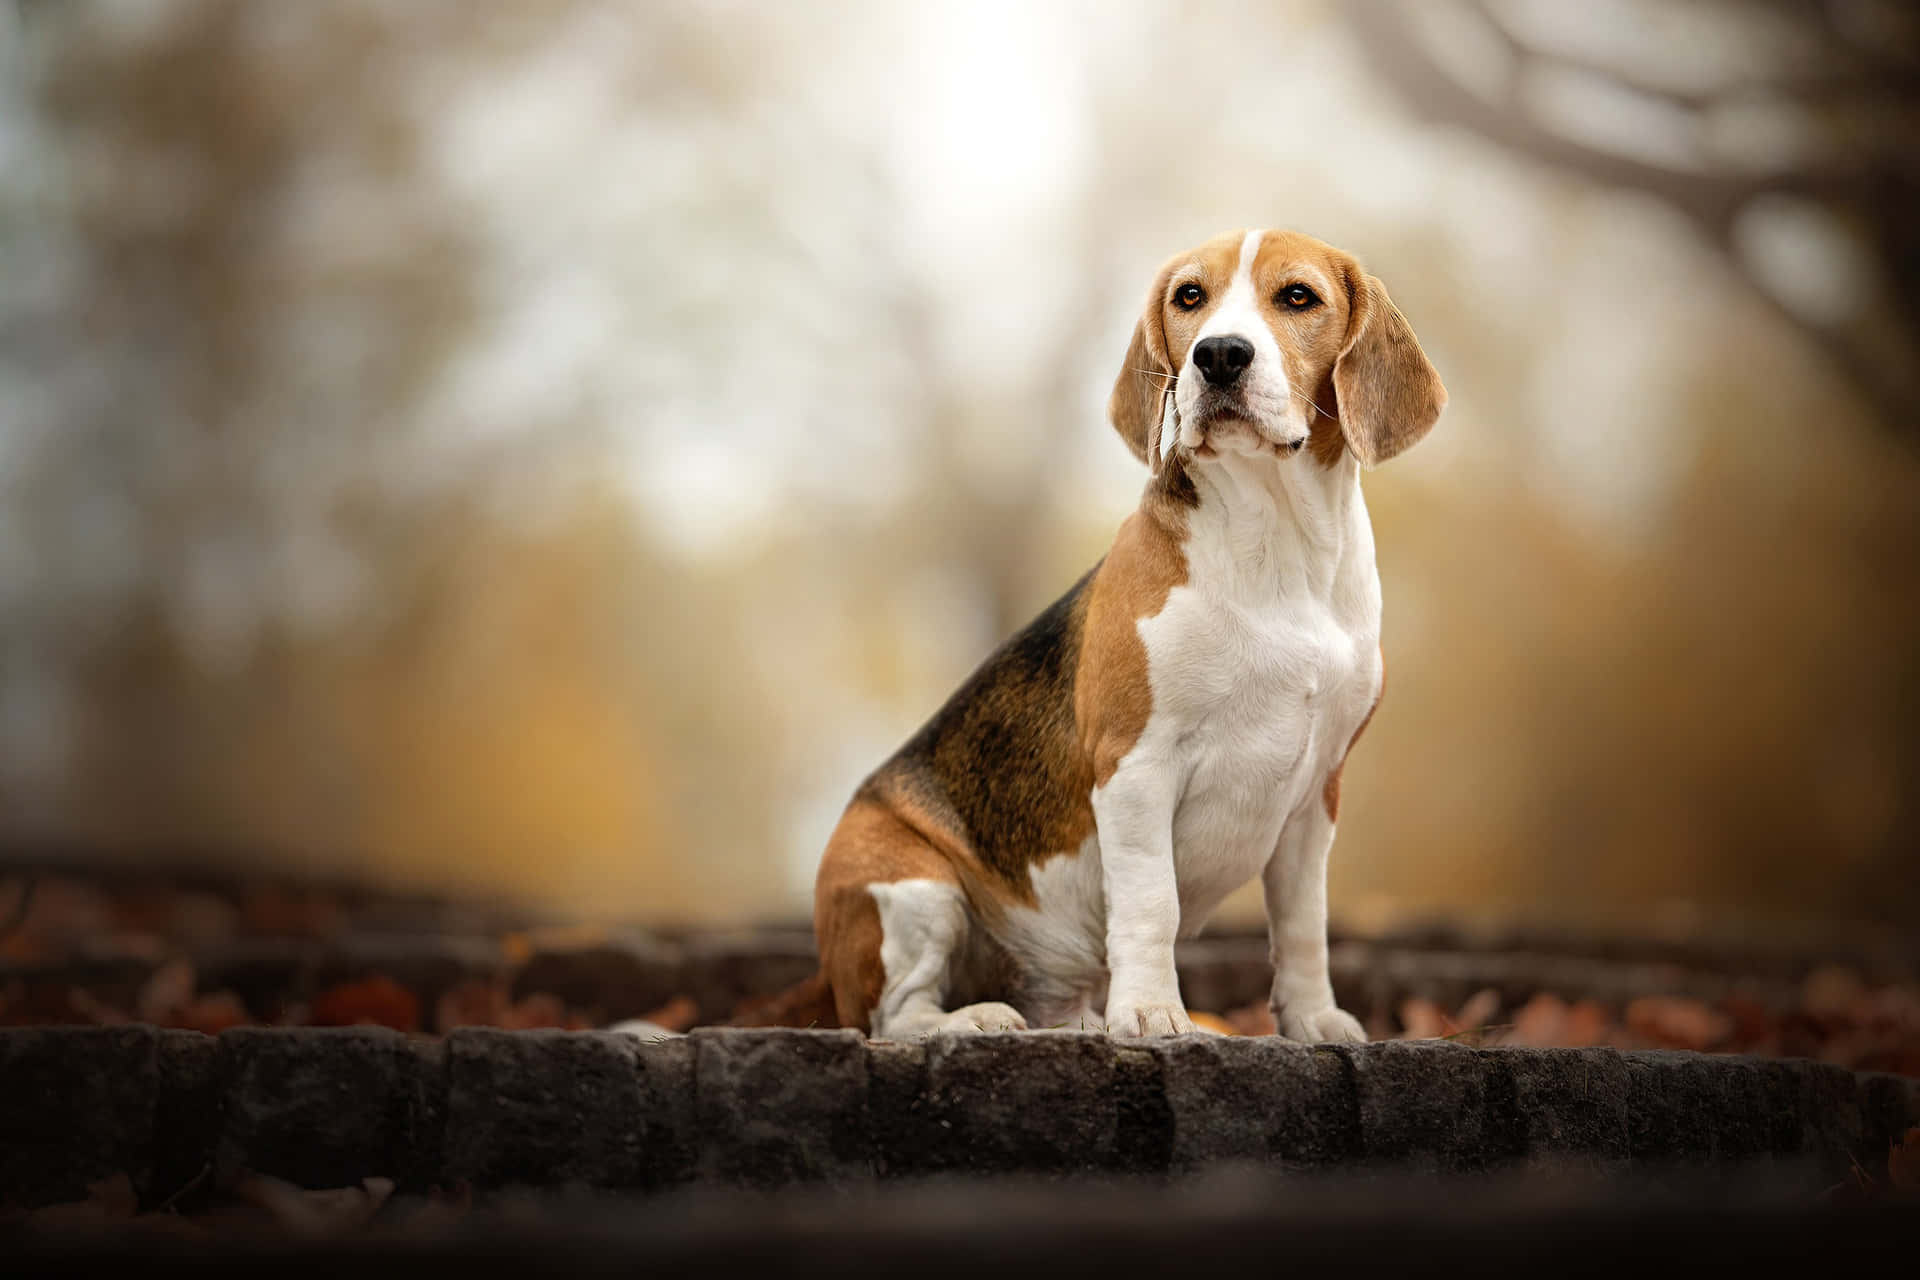 Cute Beagle pup enjoying a walk outdoors